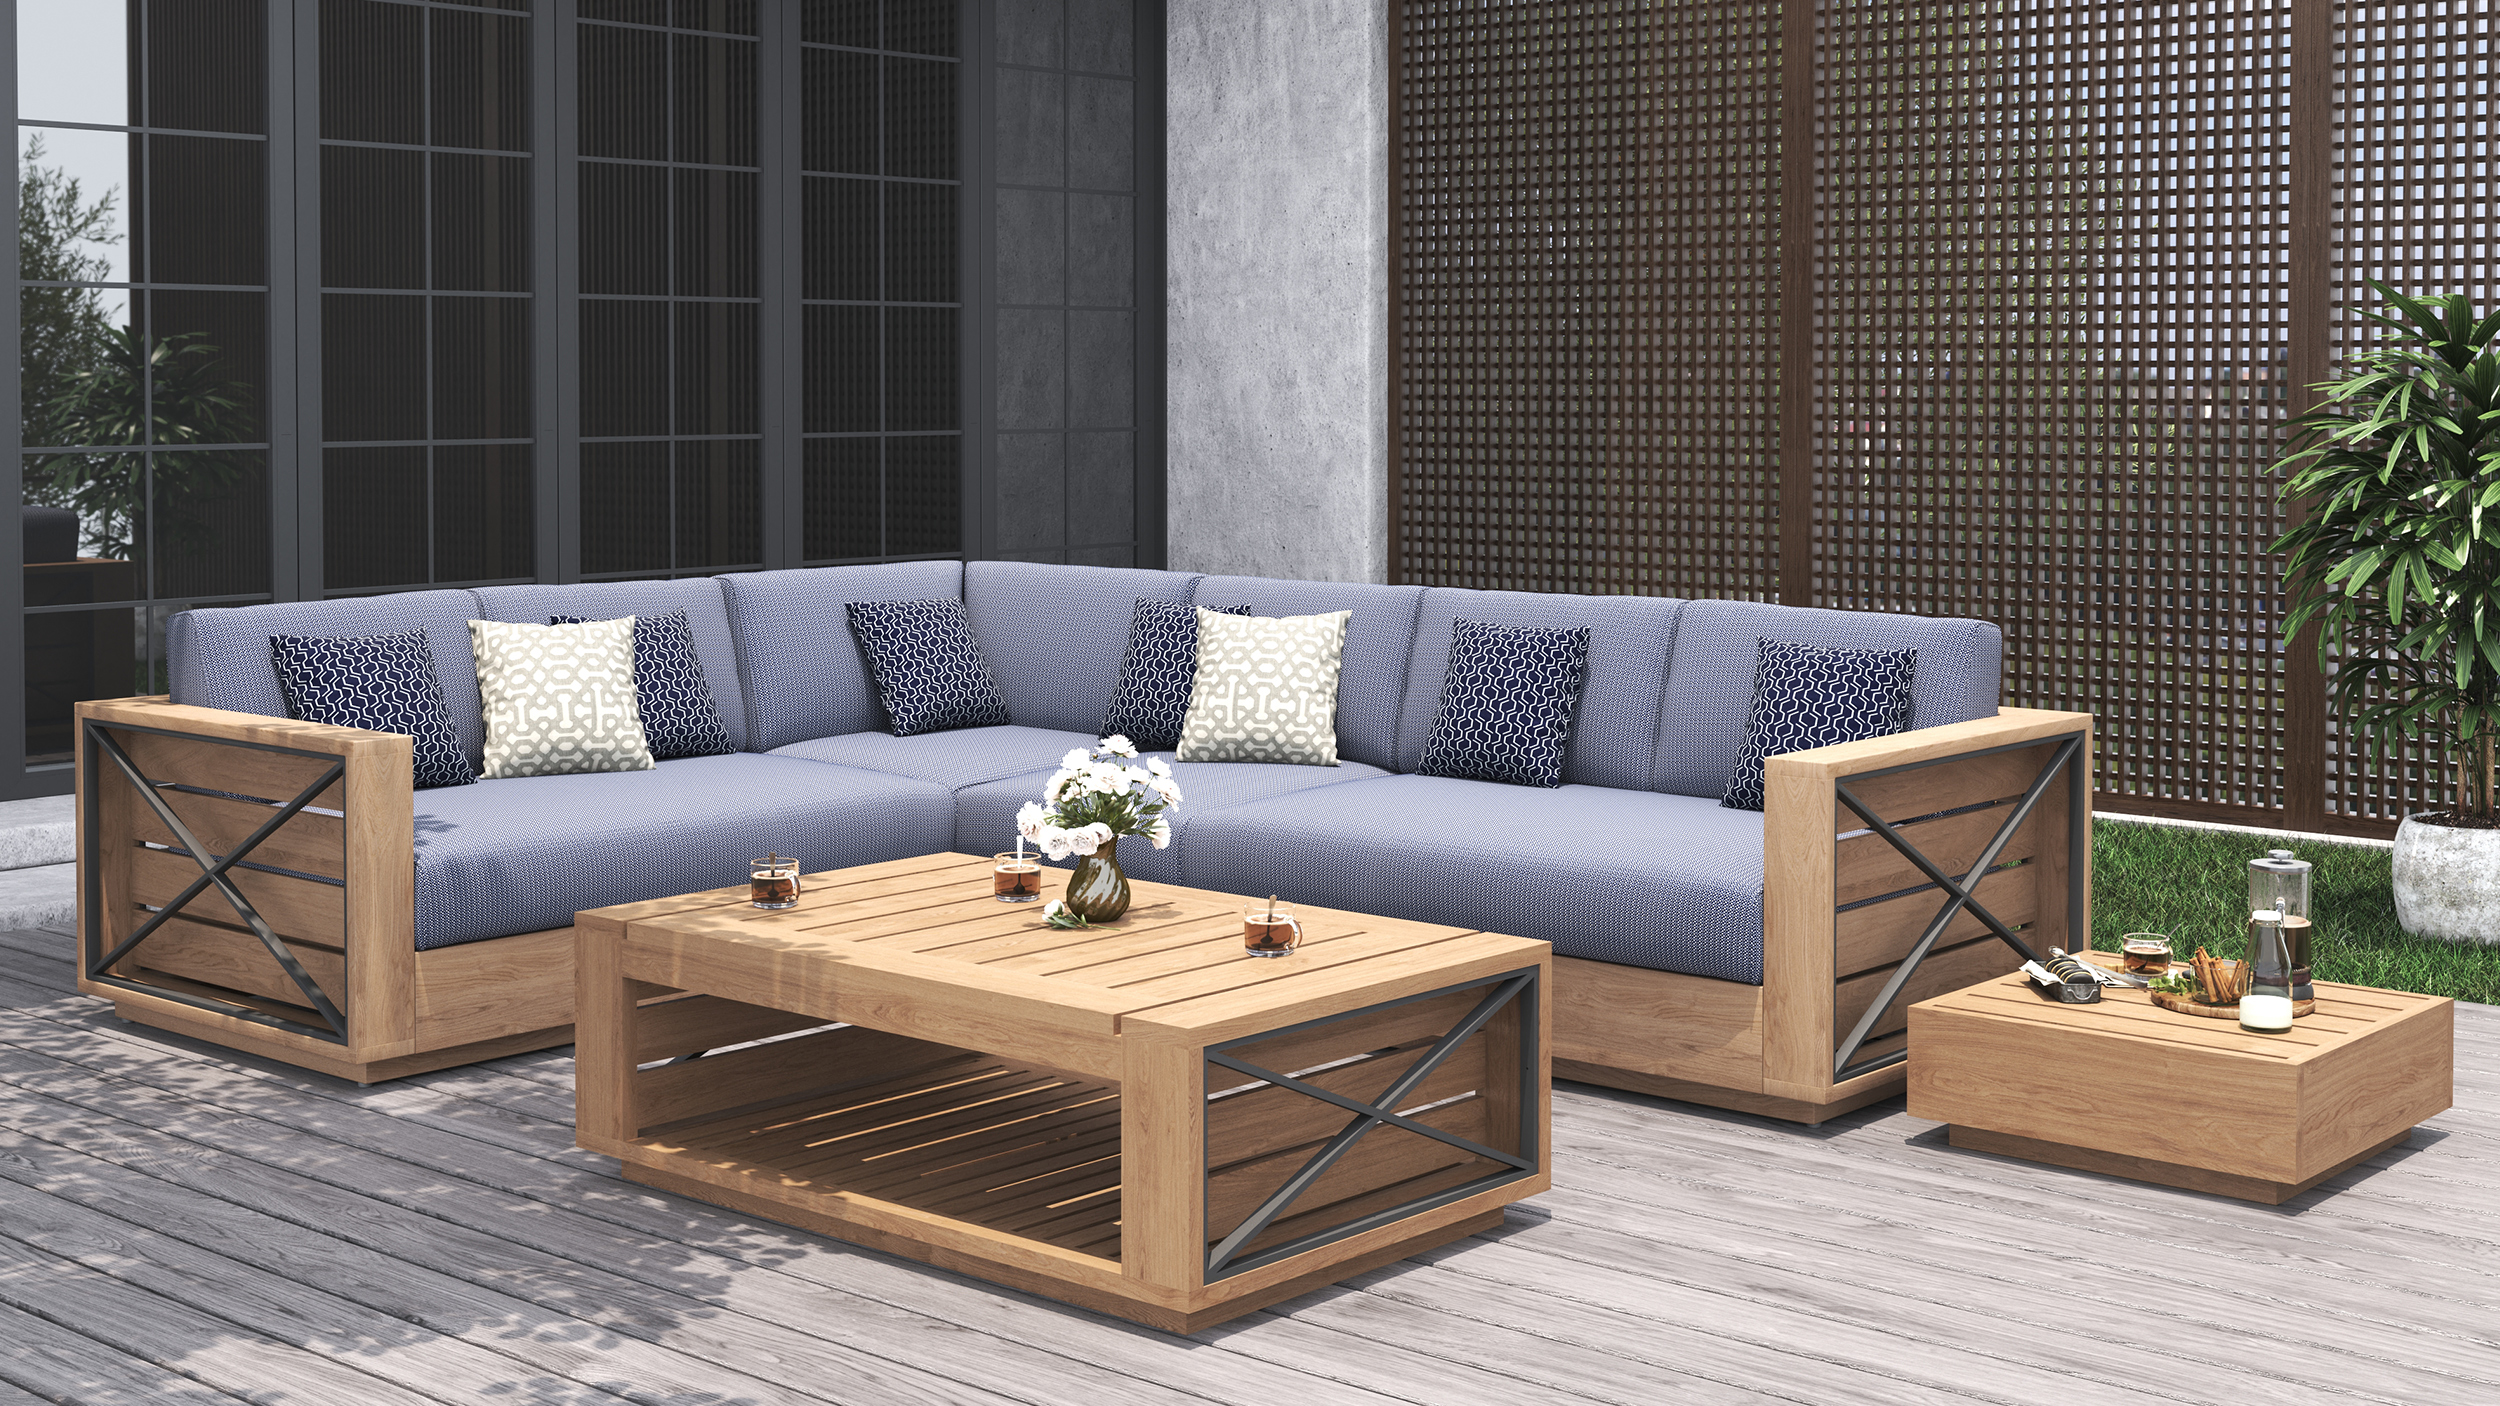 8.Altarra Sofa Modular Config 5 Fontelina Blue.effectsresult